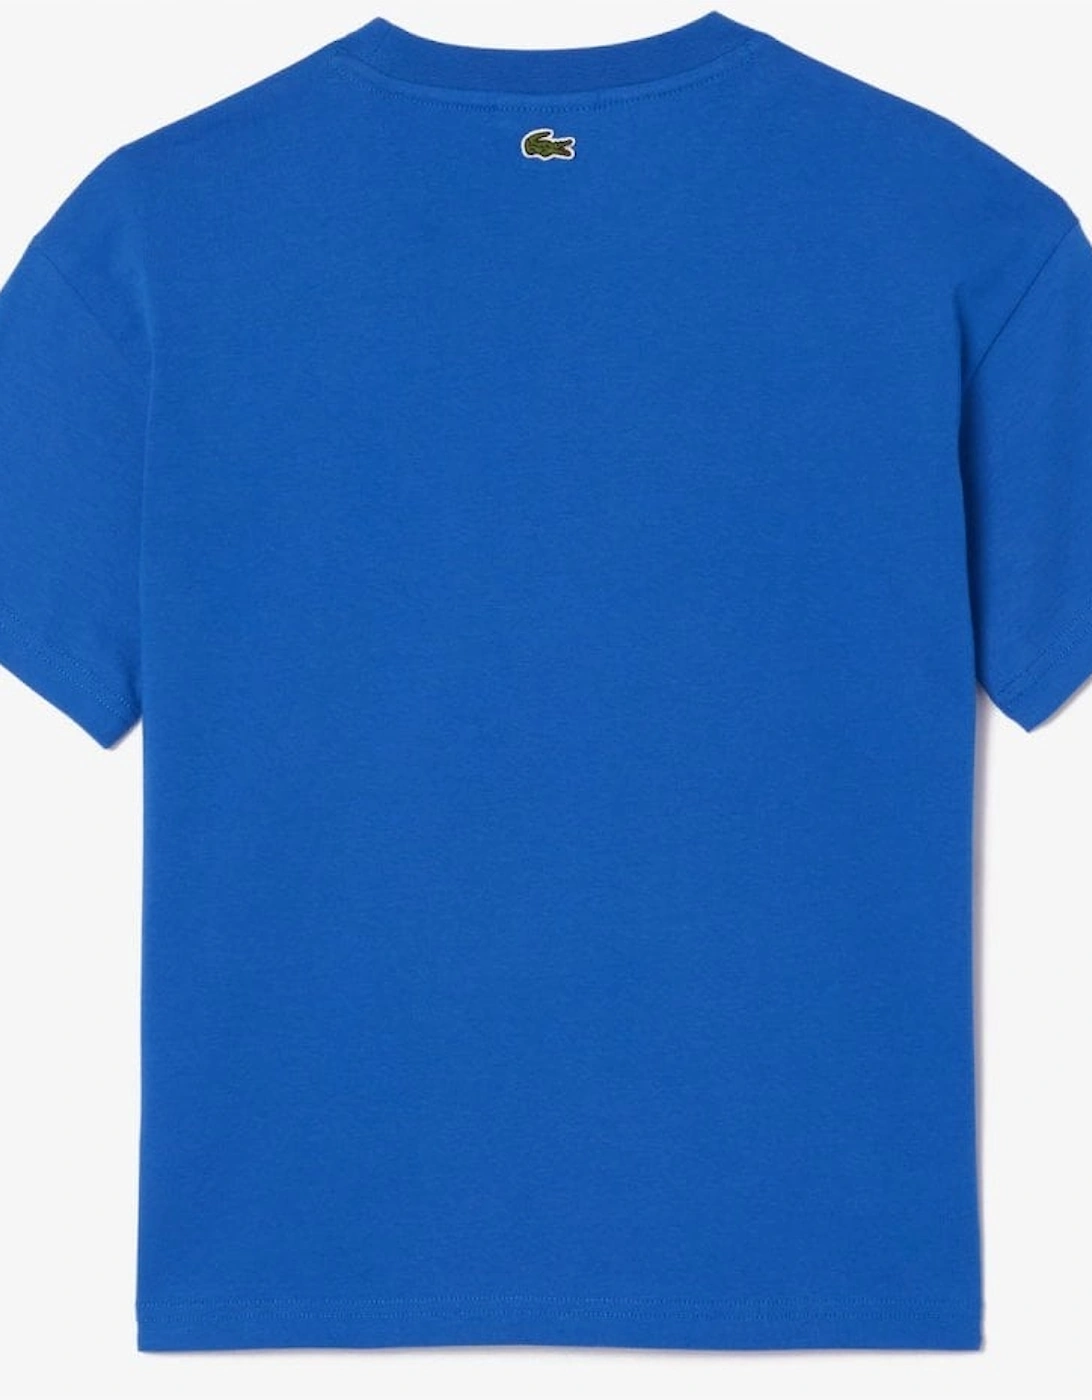 Boy's Blue Crew Neck T-shirt With Large Crocodile Logo